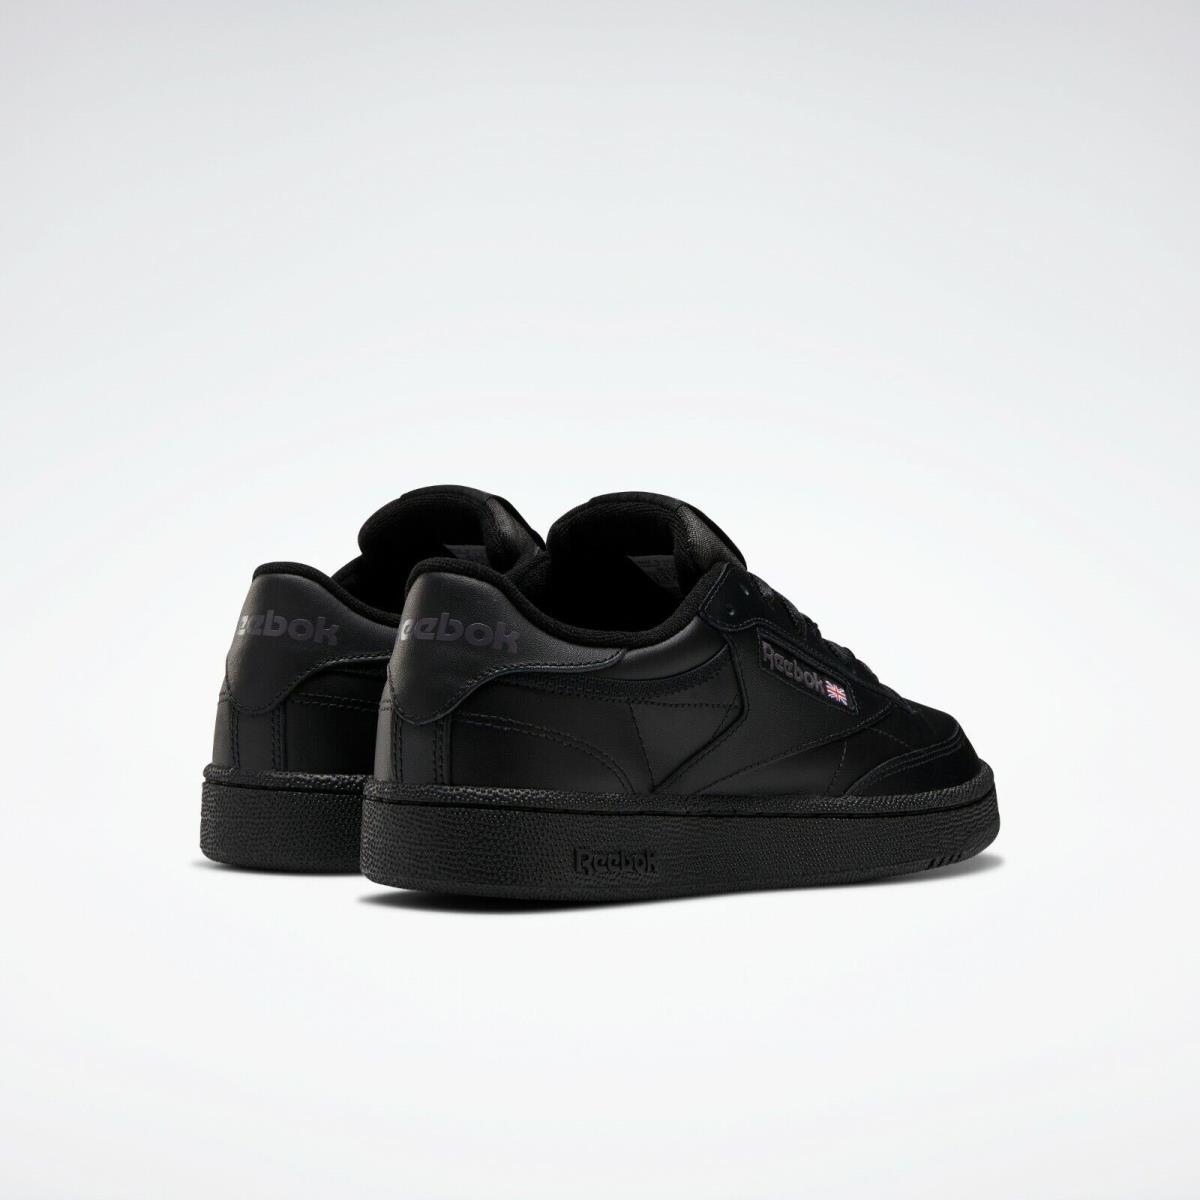 Reebok shoes Classic - Black 2